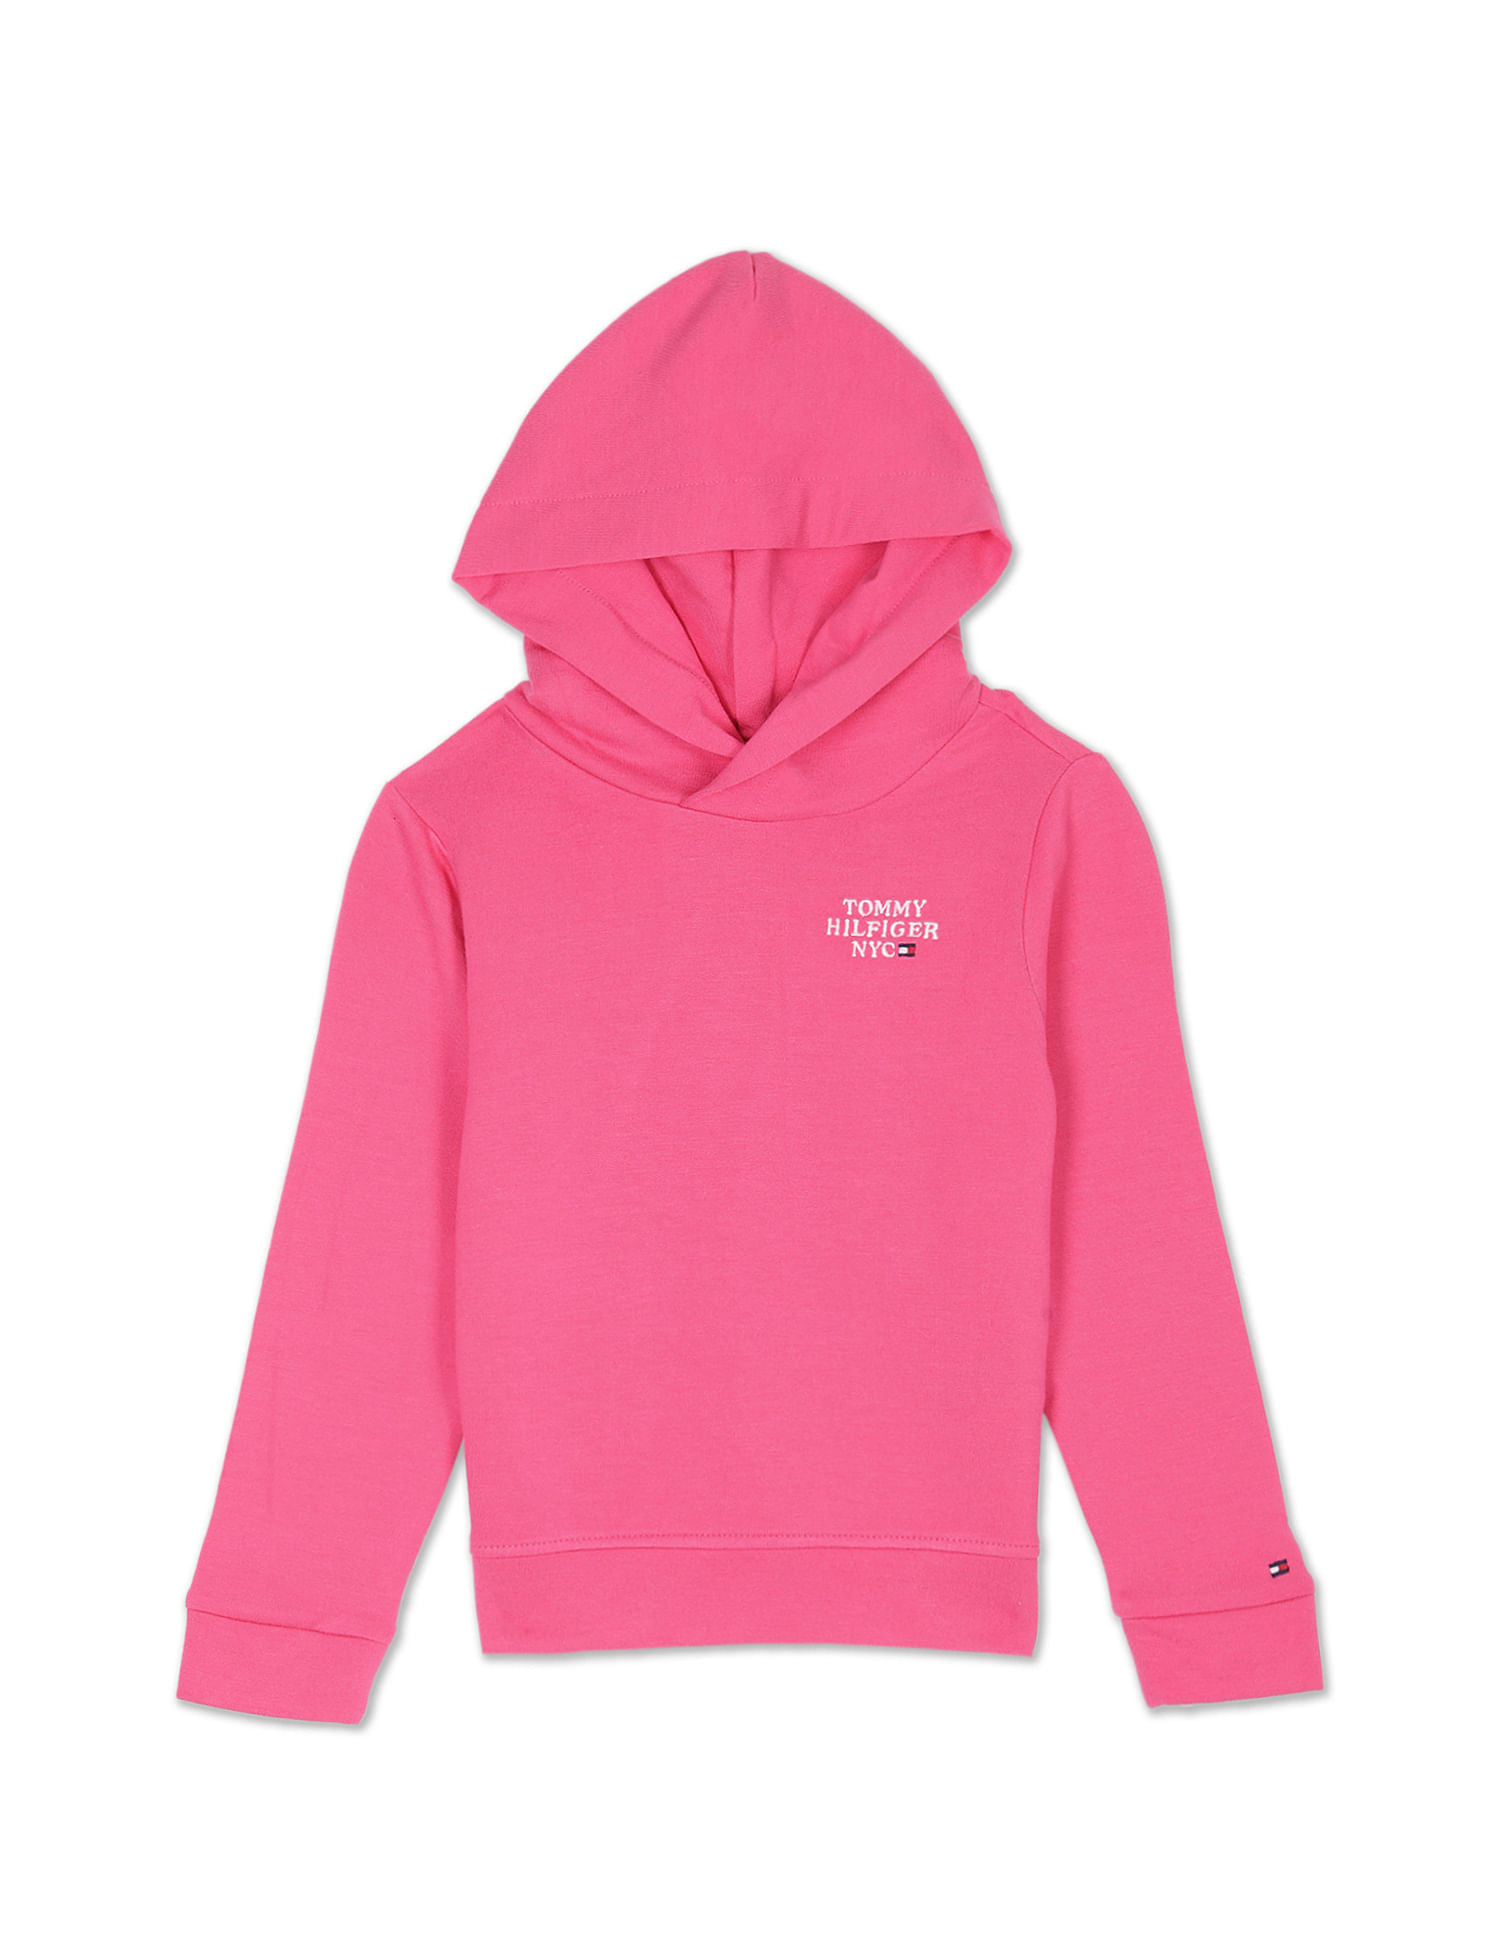 Buy Tommy Hilfiger Kids Girls Pink Embroidered Logo Hooded Solid Sweatshirt